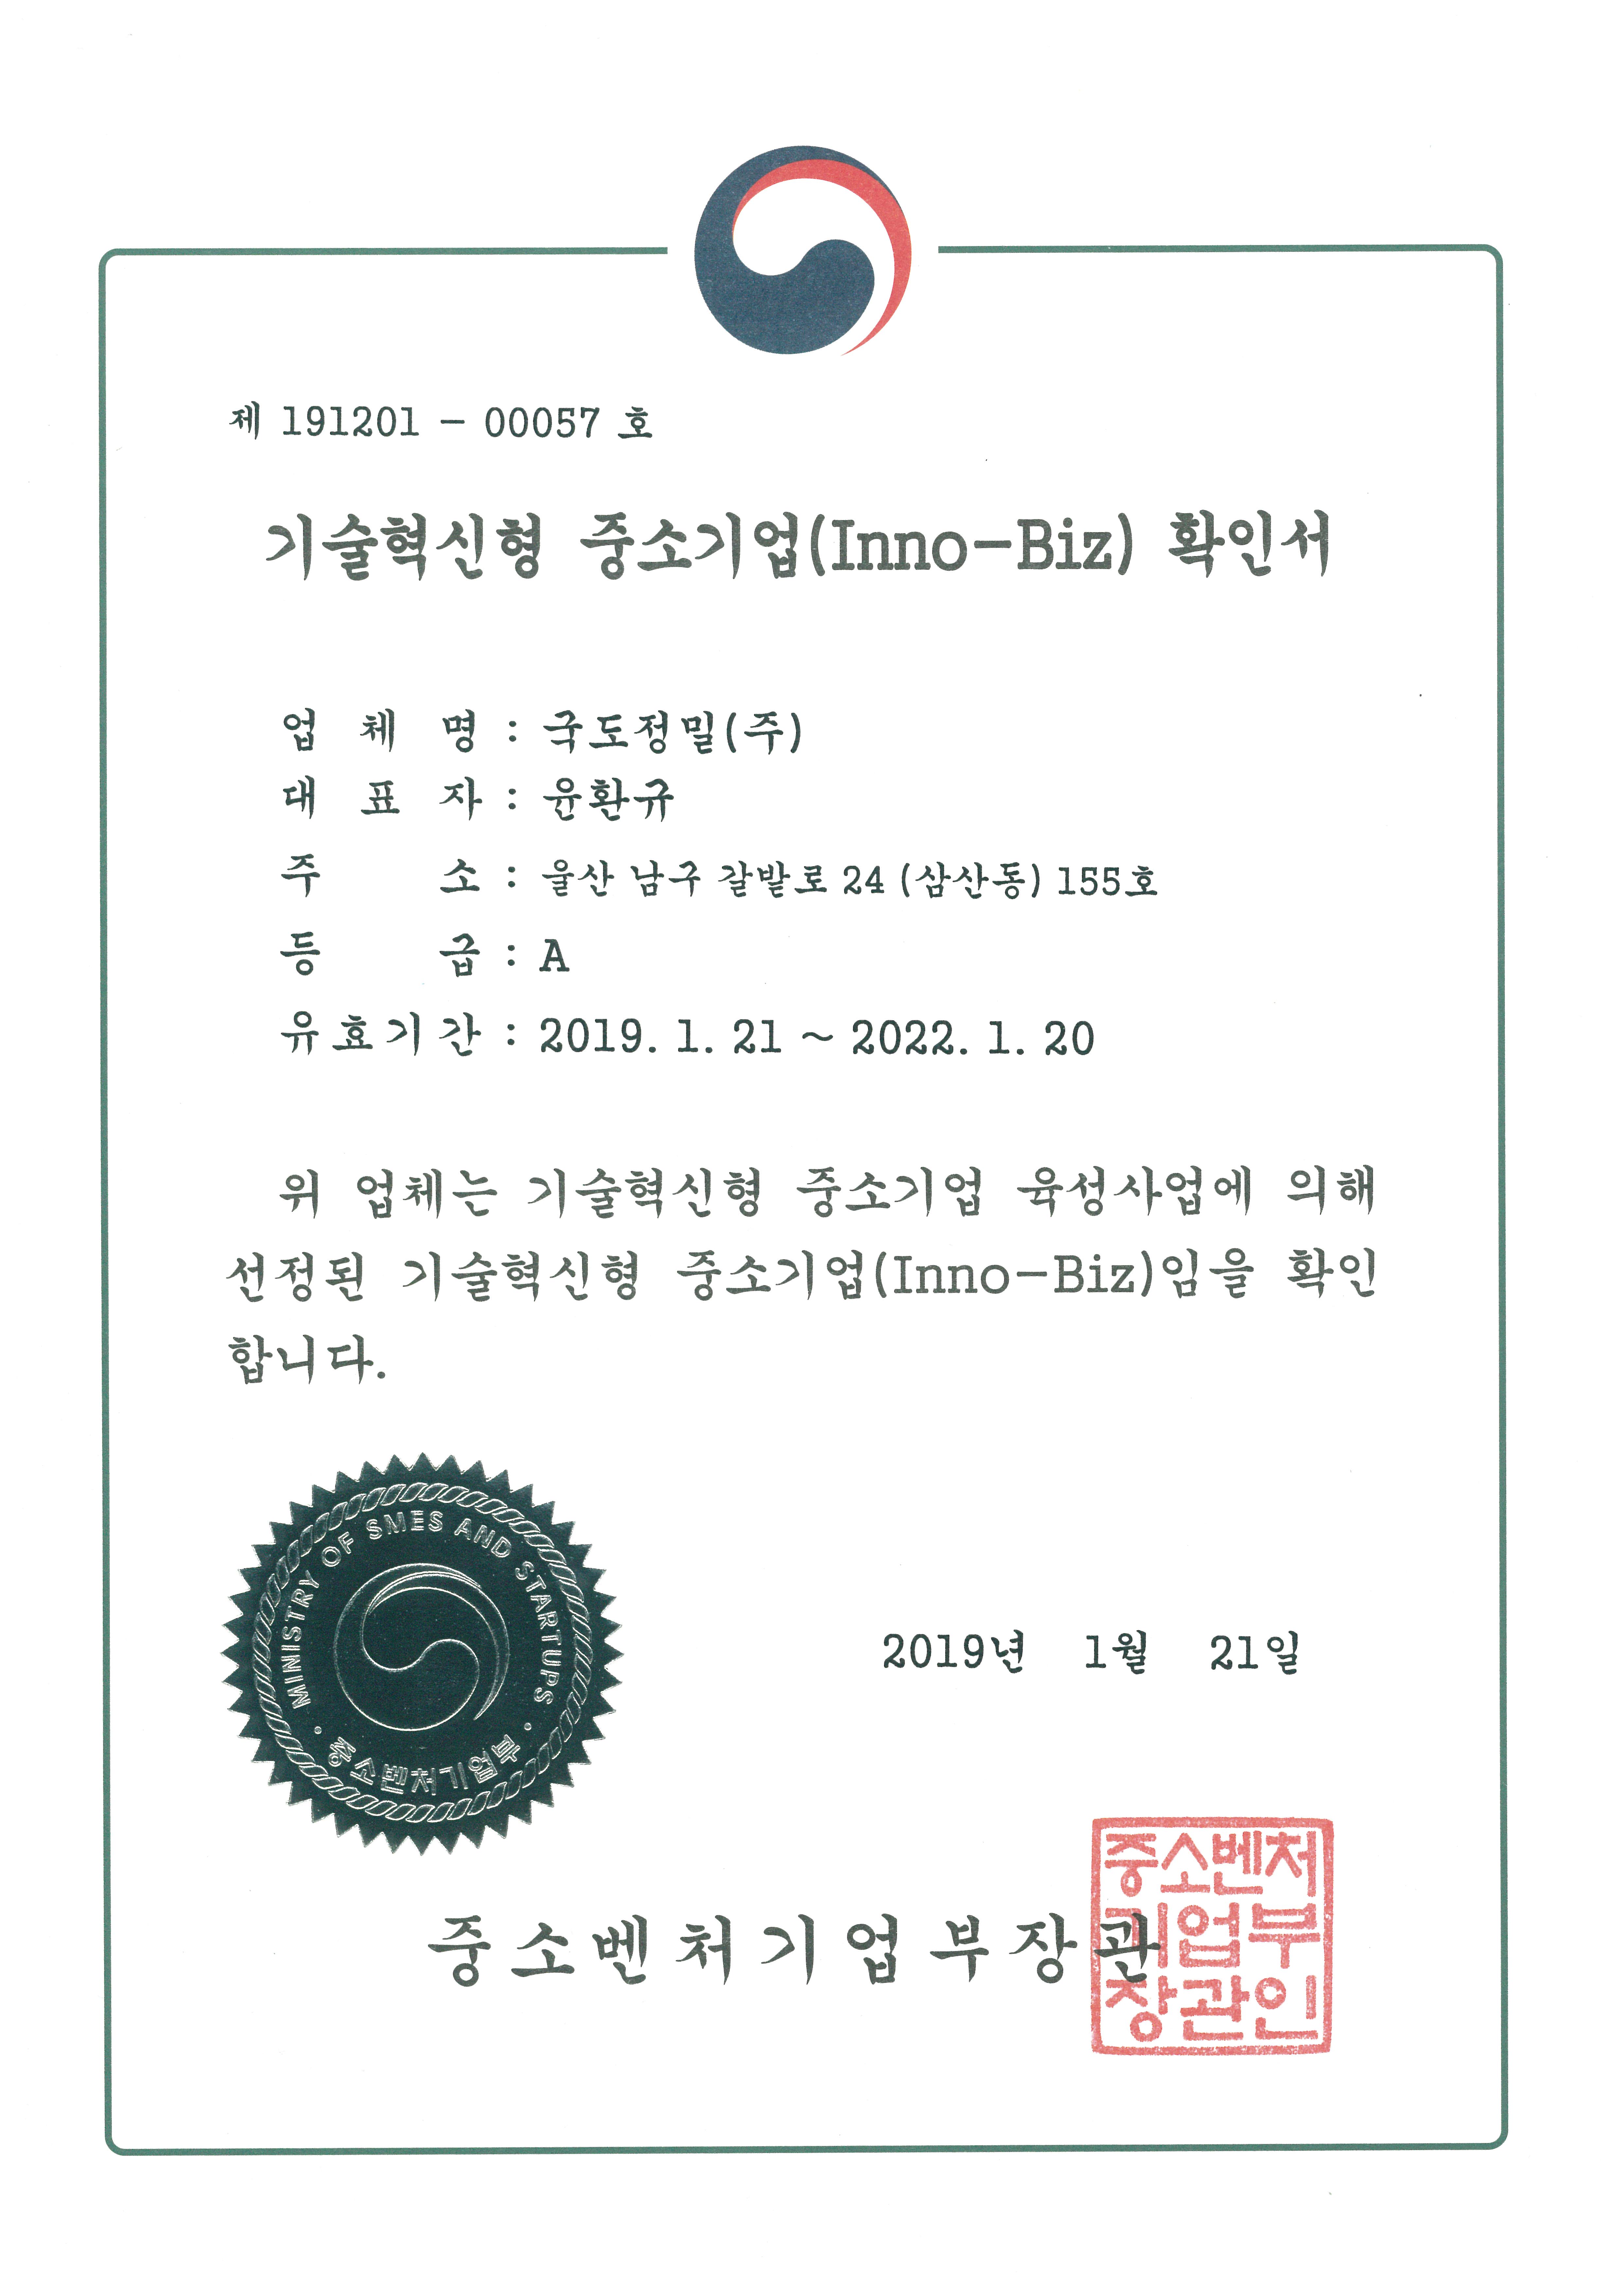 INNOBIZ Certificate